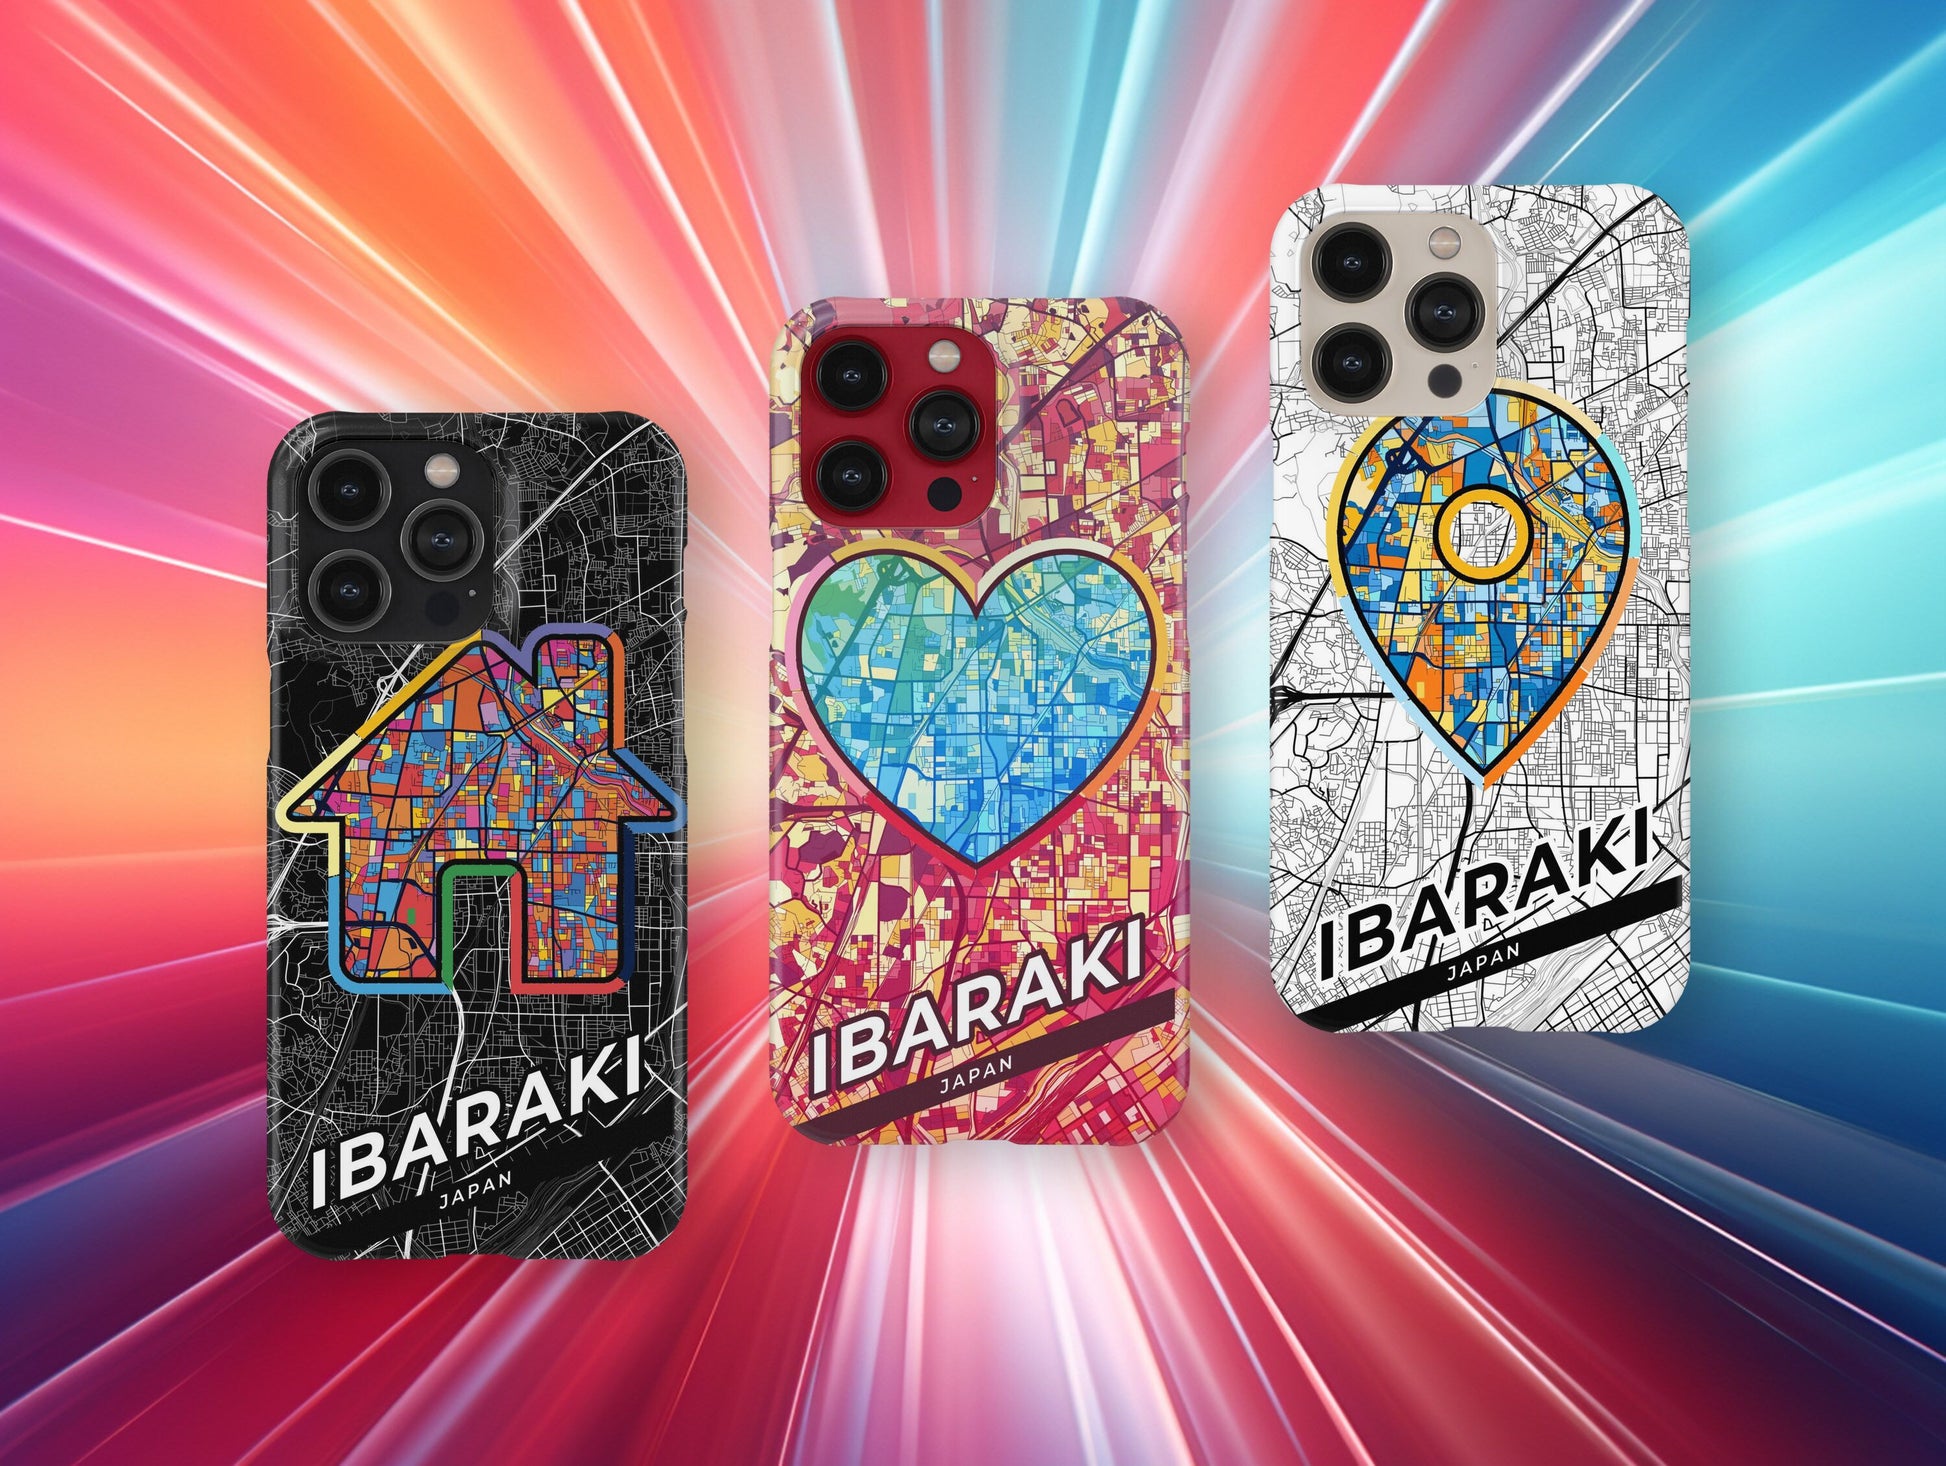 Ibaraki Japan slim phone case with colorful icon. Birthday, wedding or housewarming gift. Couple match cases.